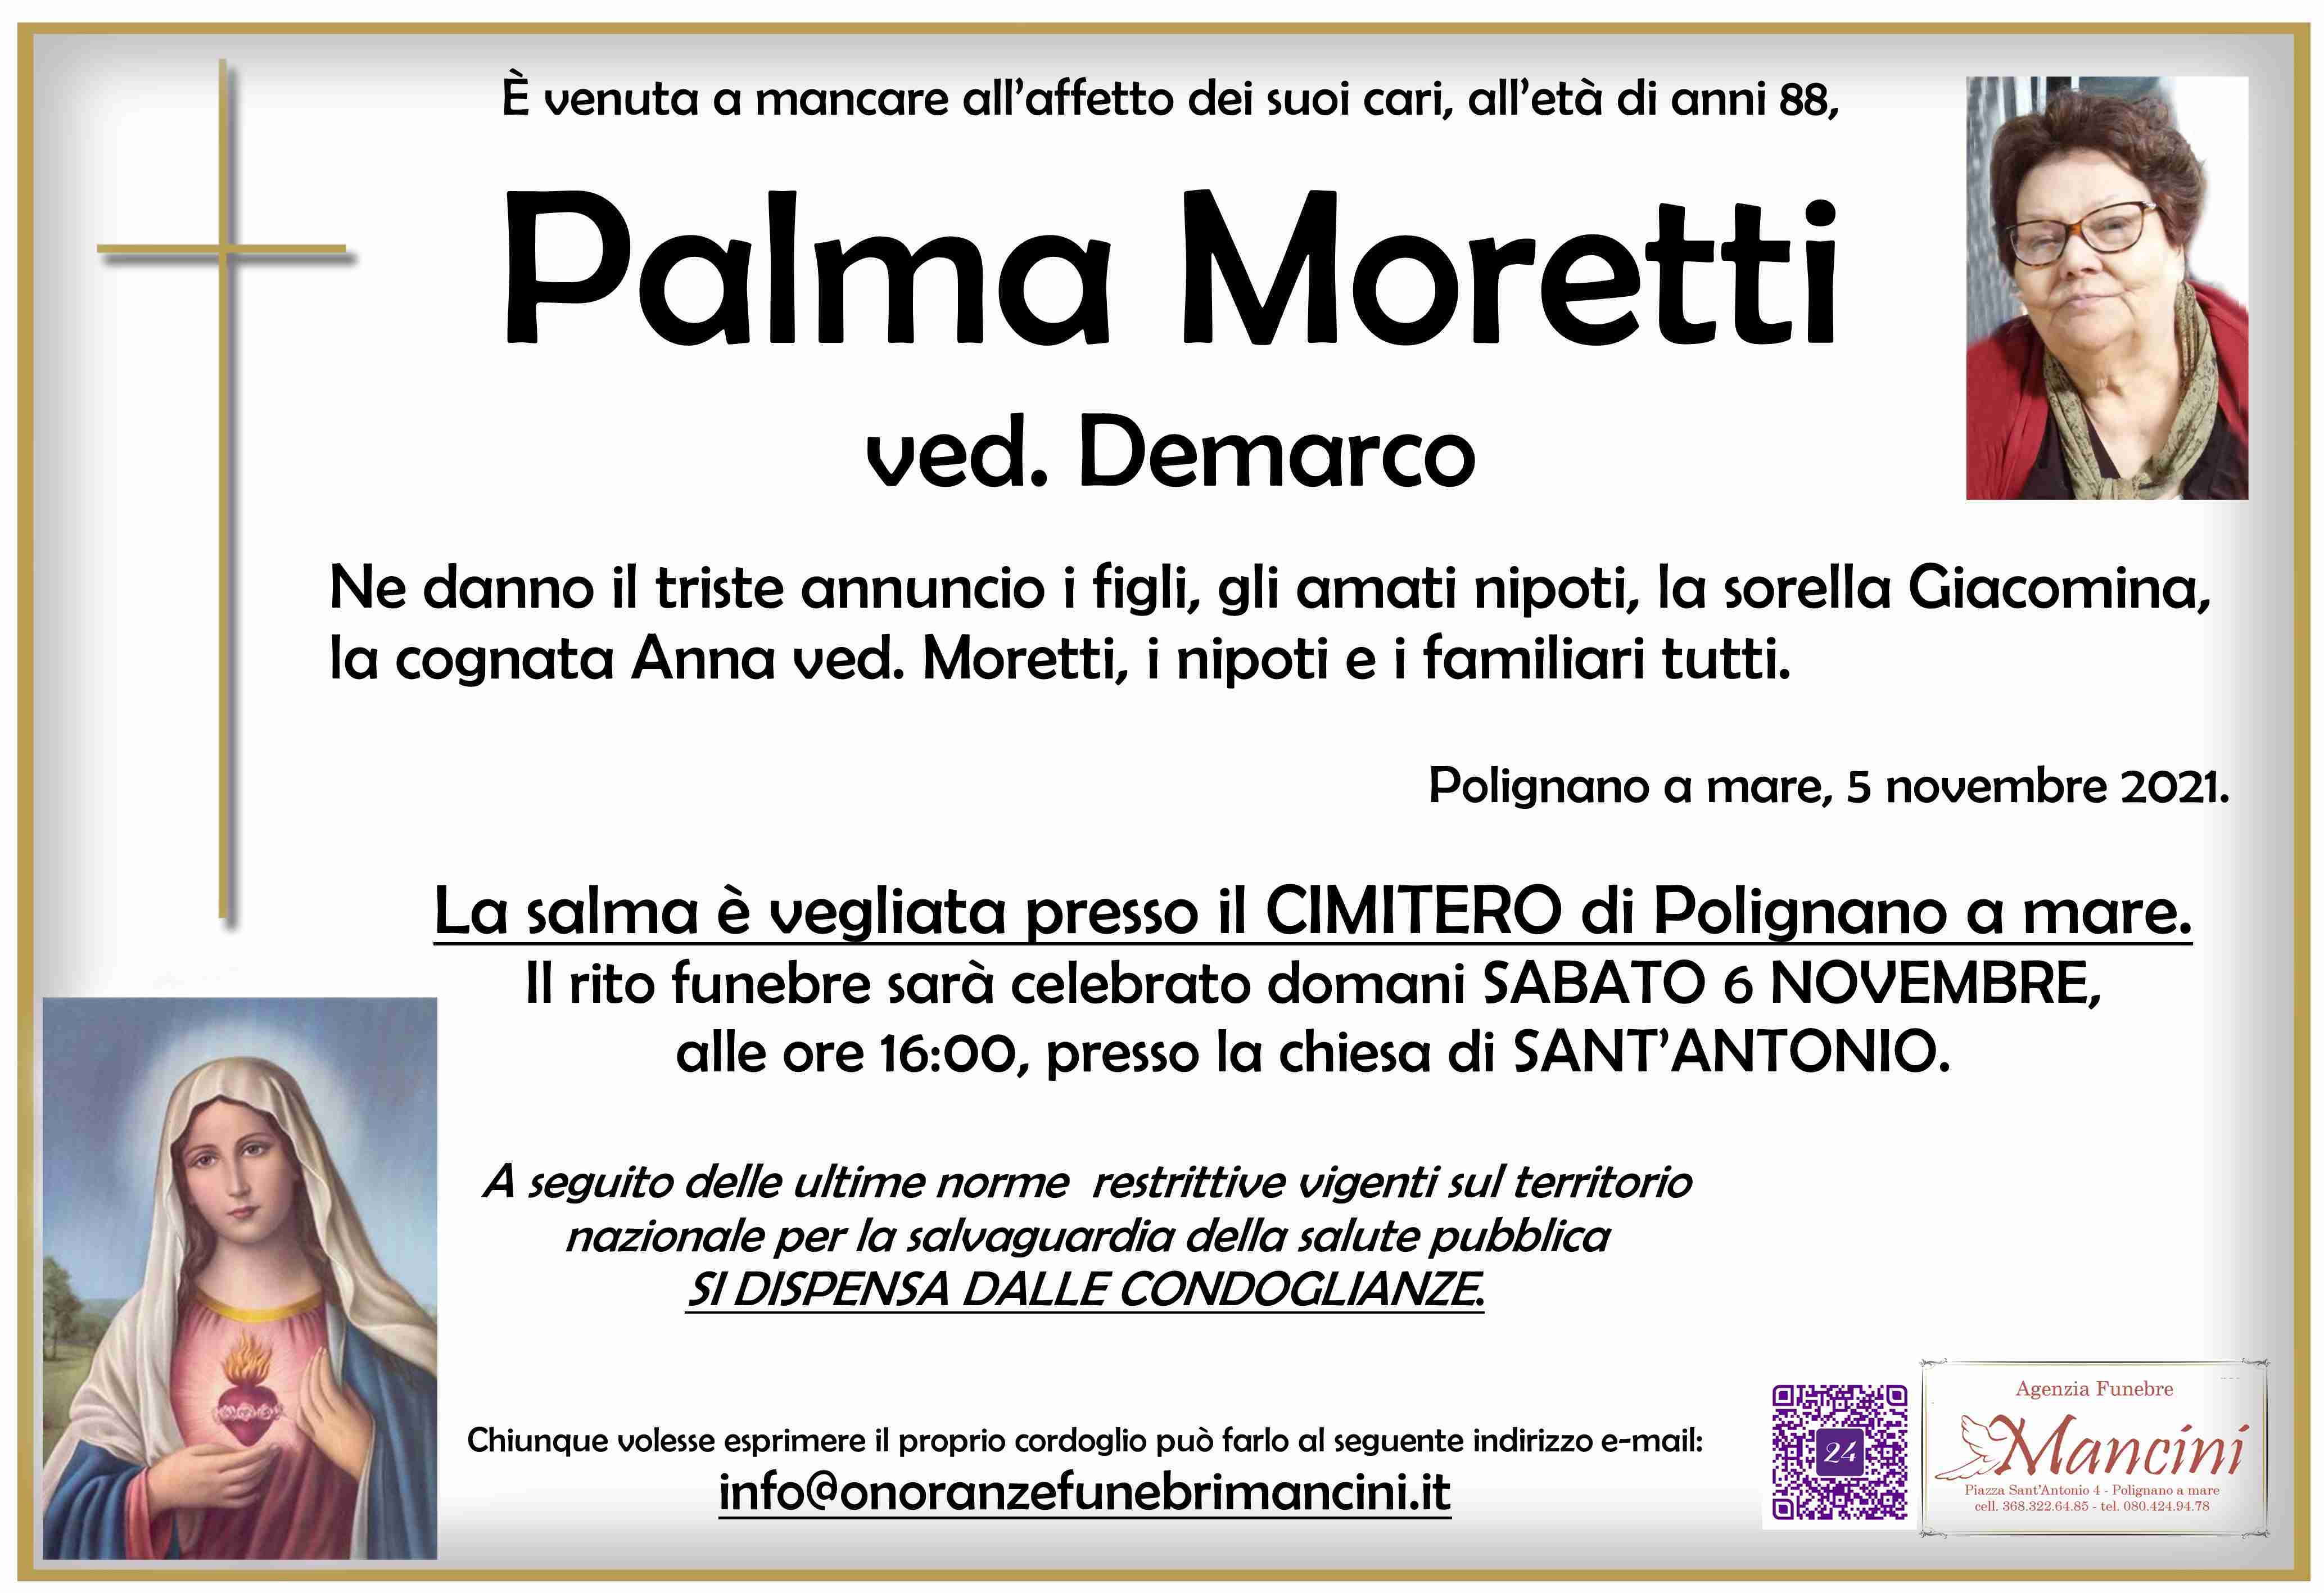 Palma Moretti